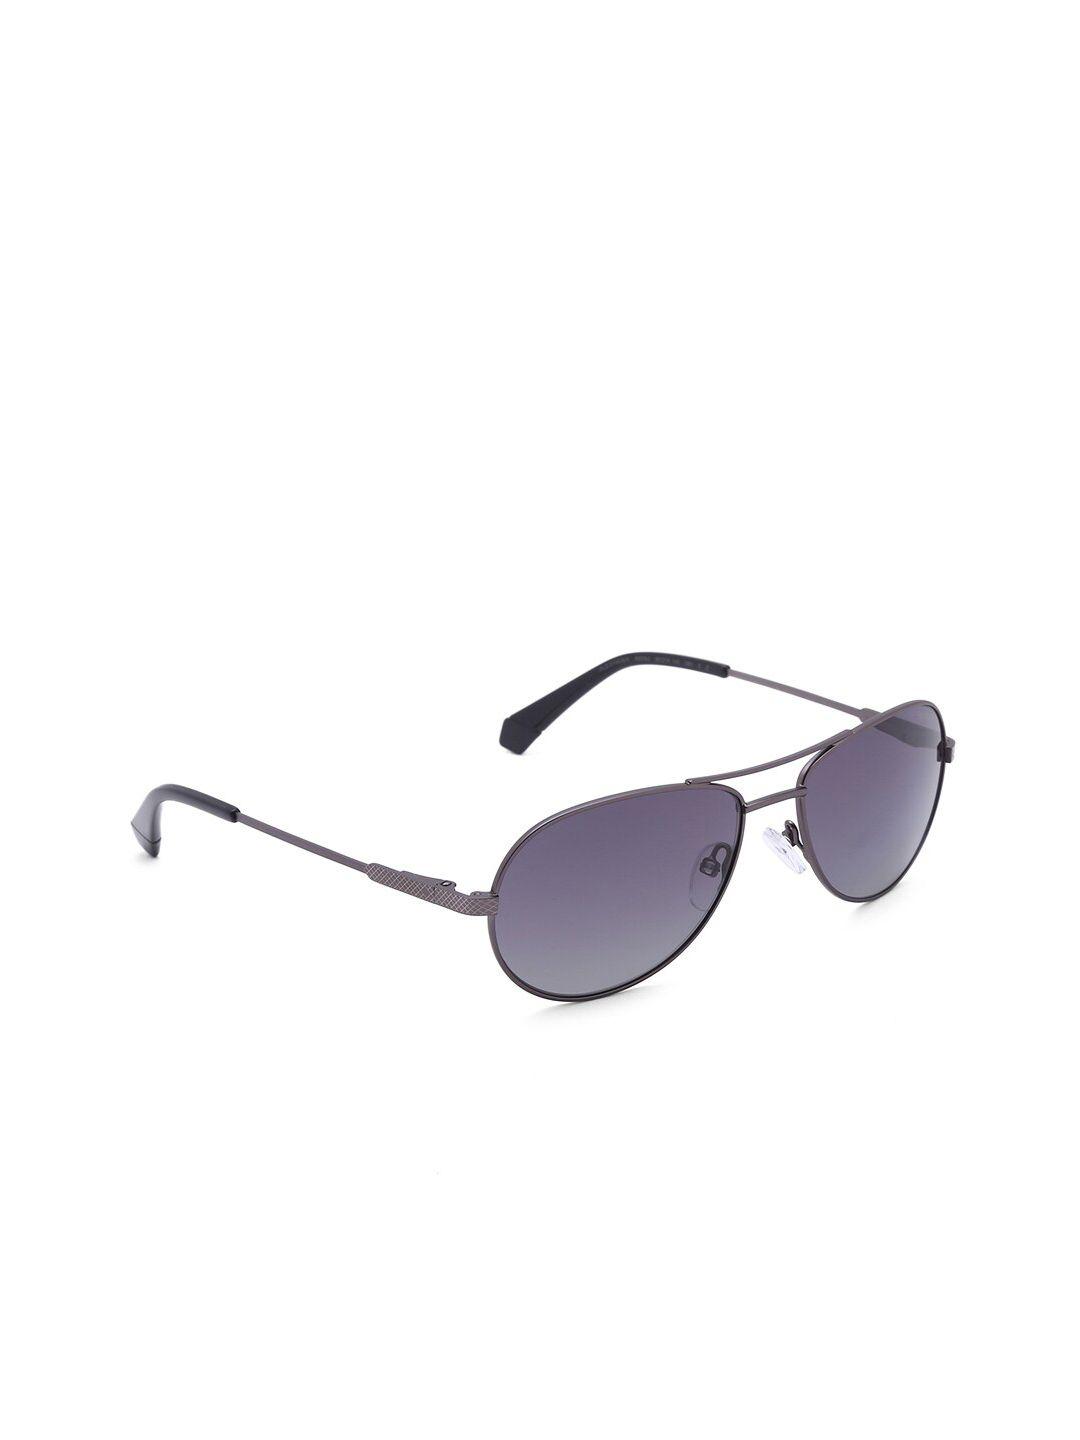 polaroid men violet lens & black aviator sunglasses with uv protected lens 203396-40